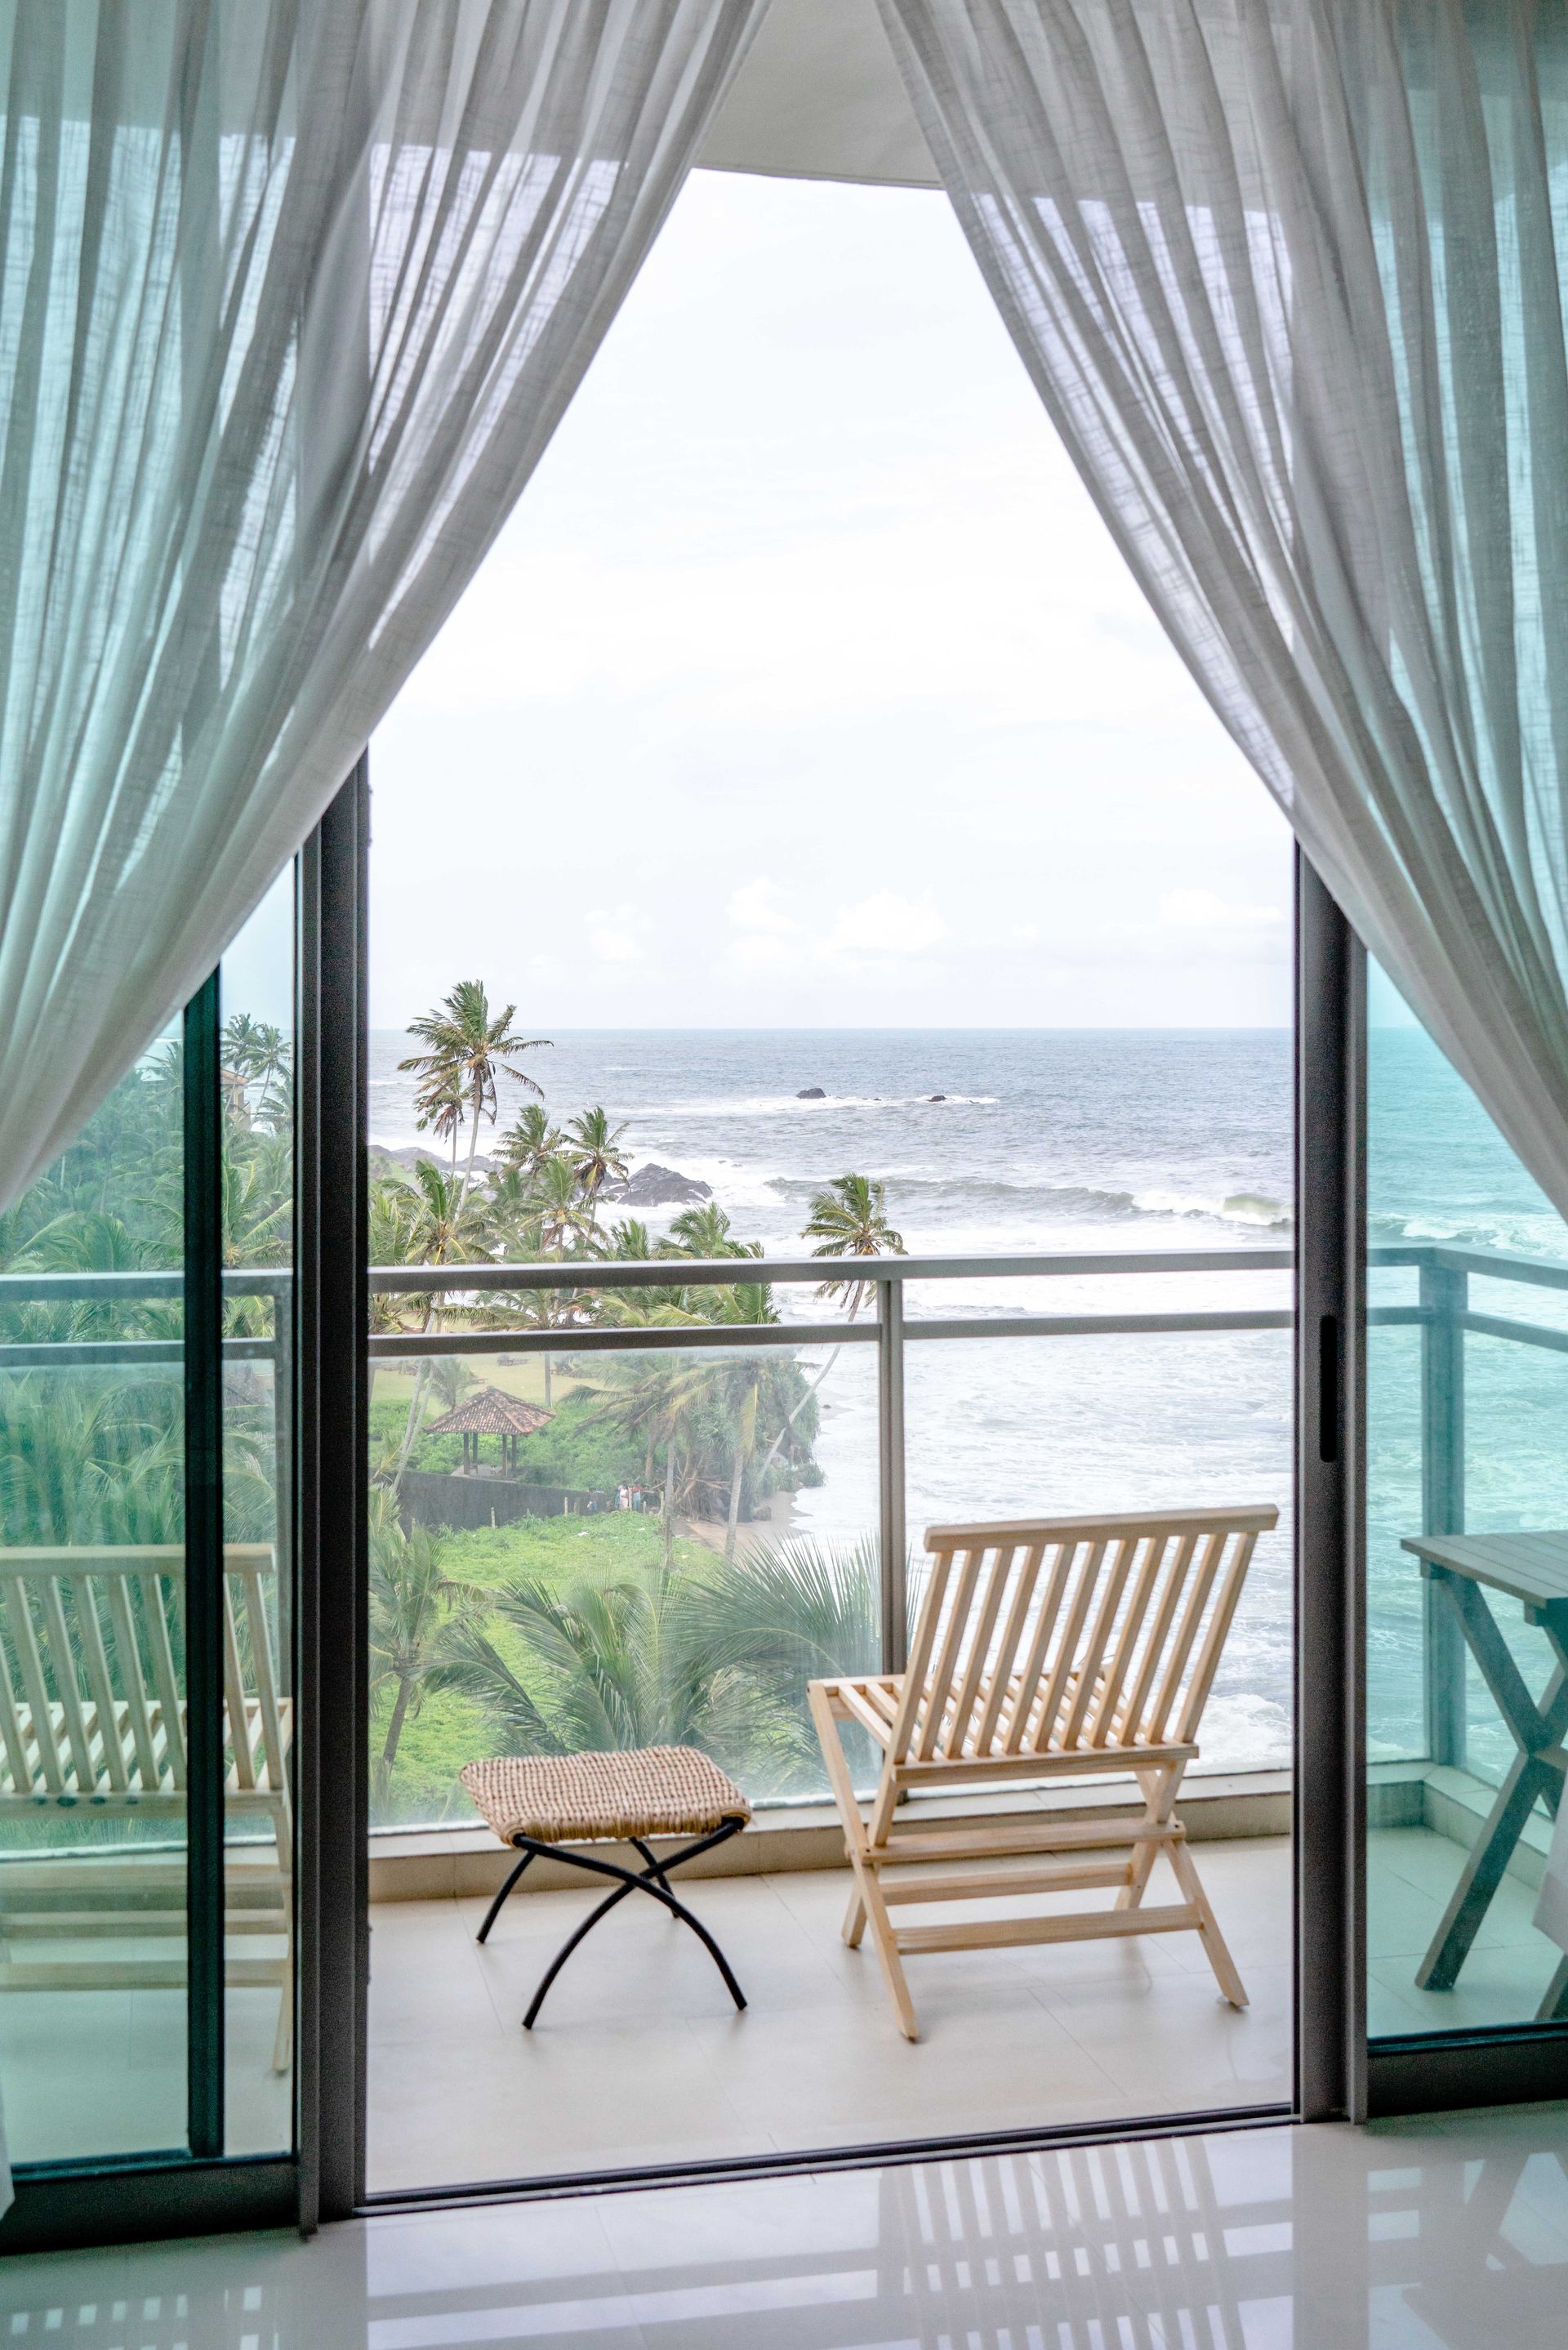 Glass sliding doors opening to ocean view of a veranda